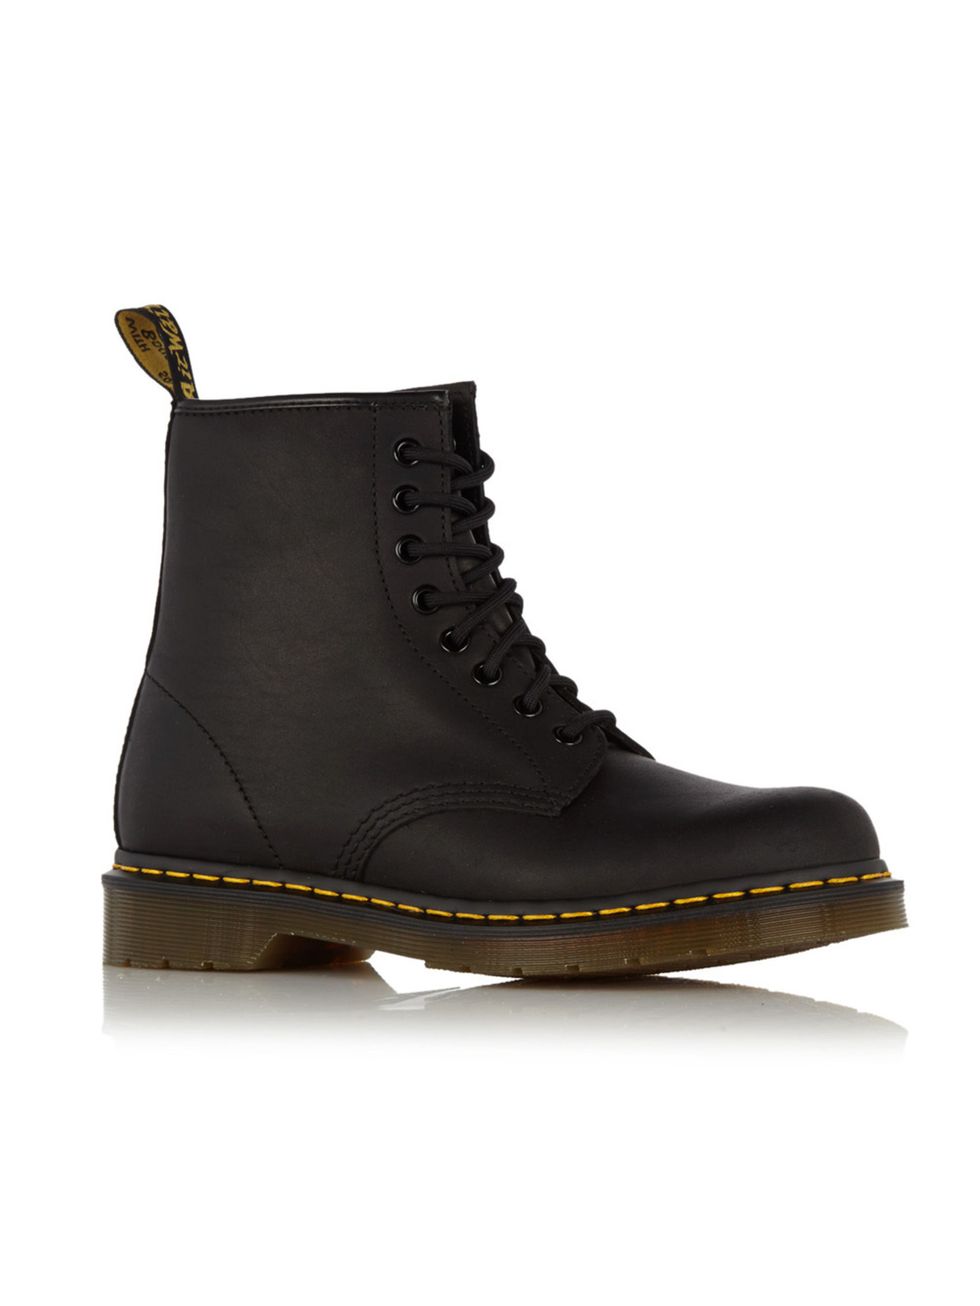 Footwear, Brown, Product, Boot, Tan, Black, Beige, Leather, Steel-toe boot, Work boots, 